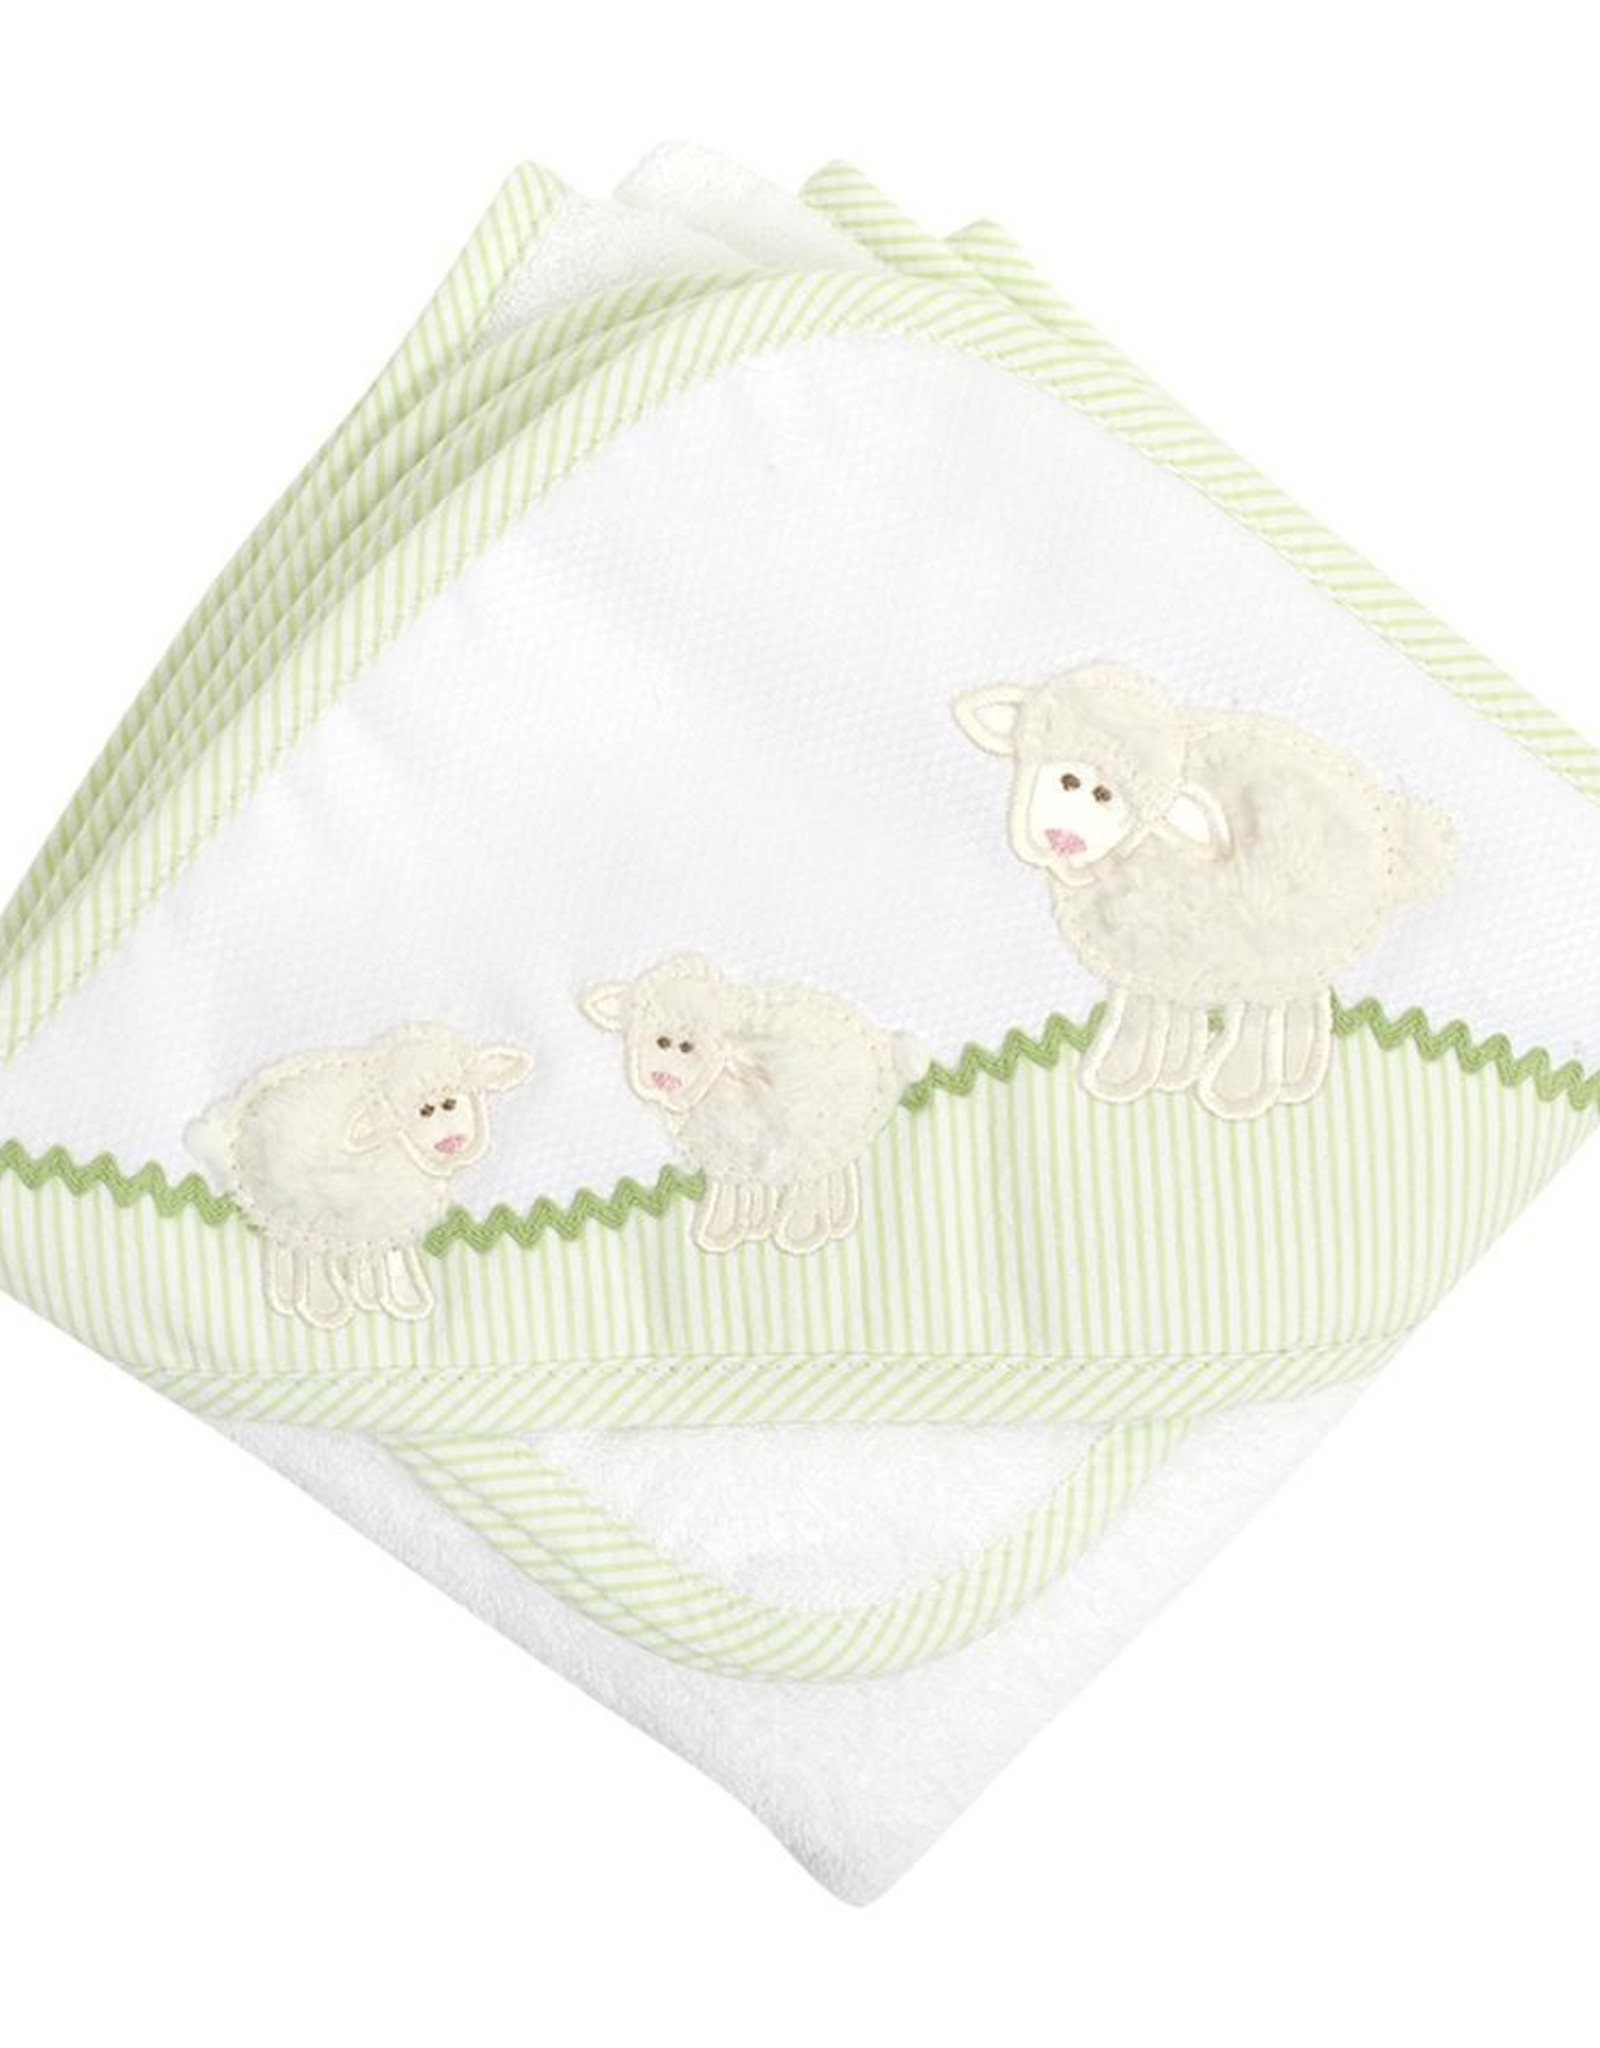 3 Marthas 3M Boxed Hooded Towel Set White Lamb